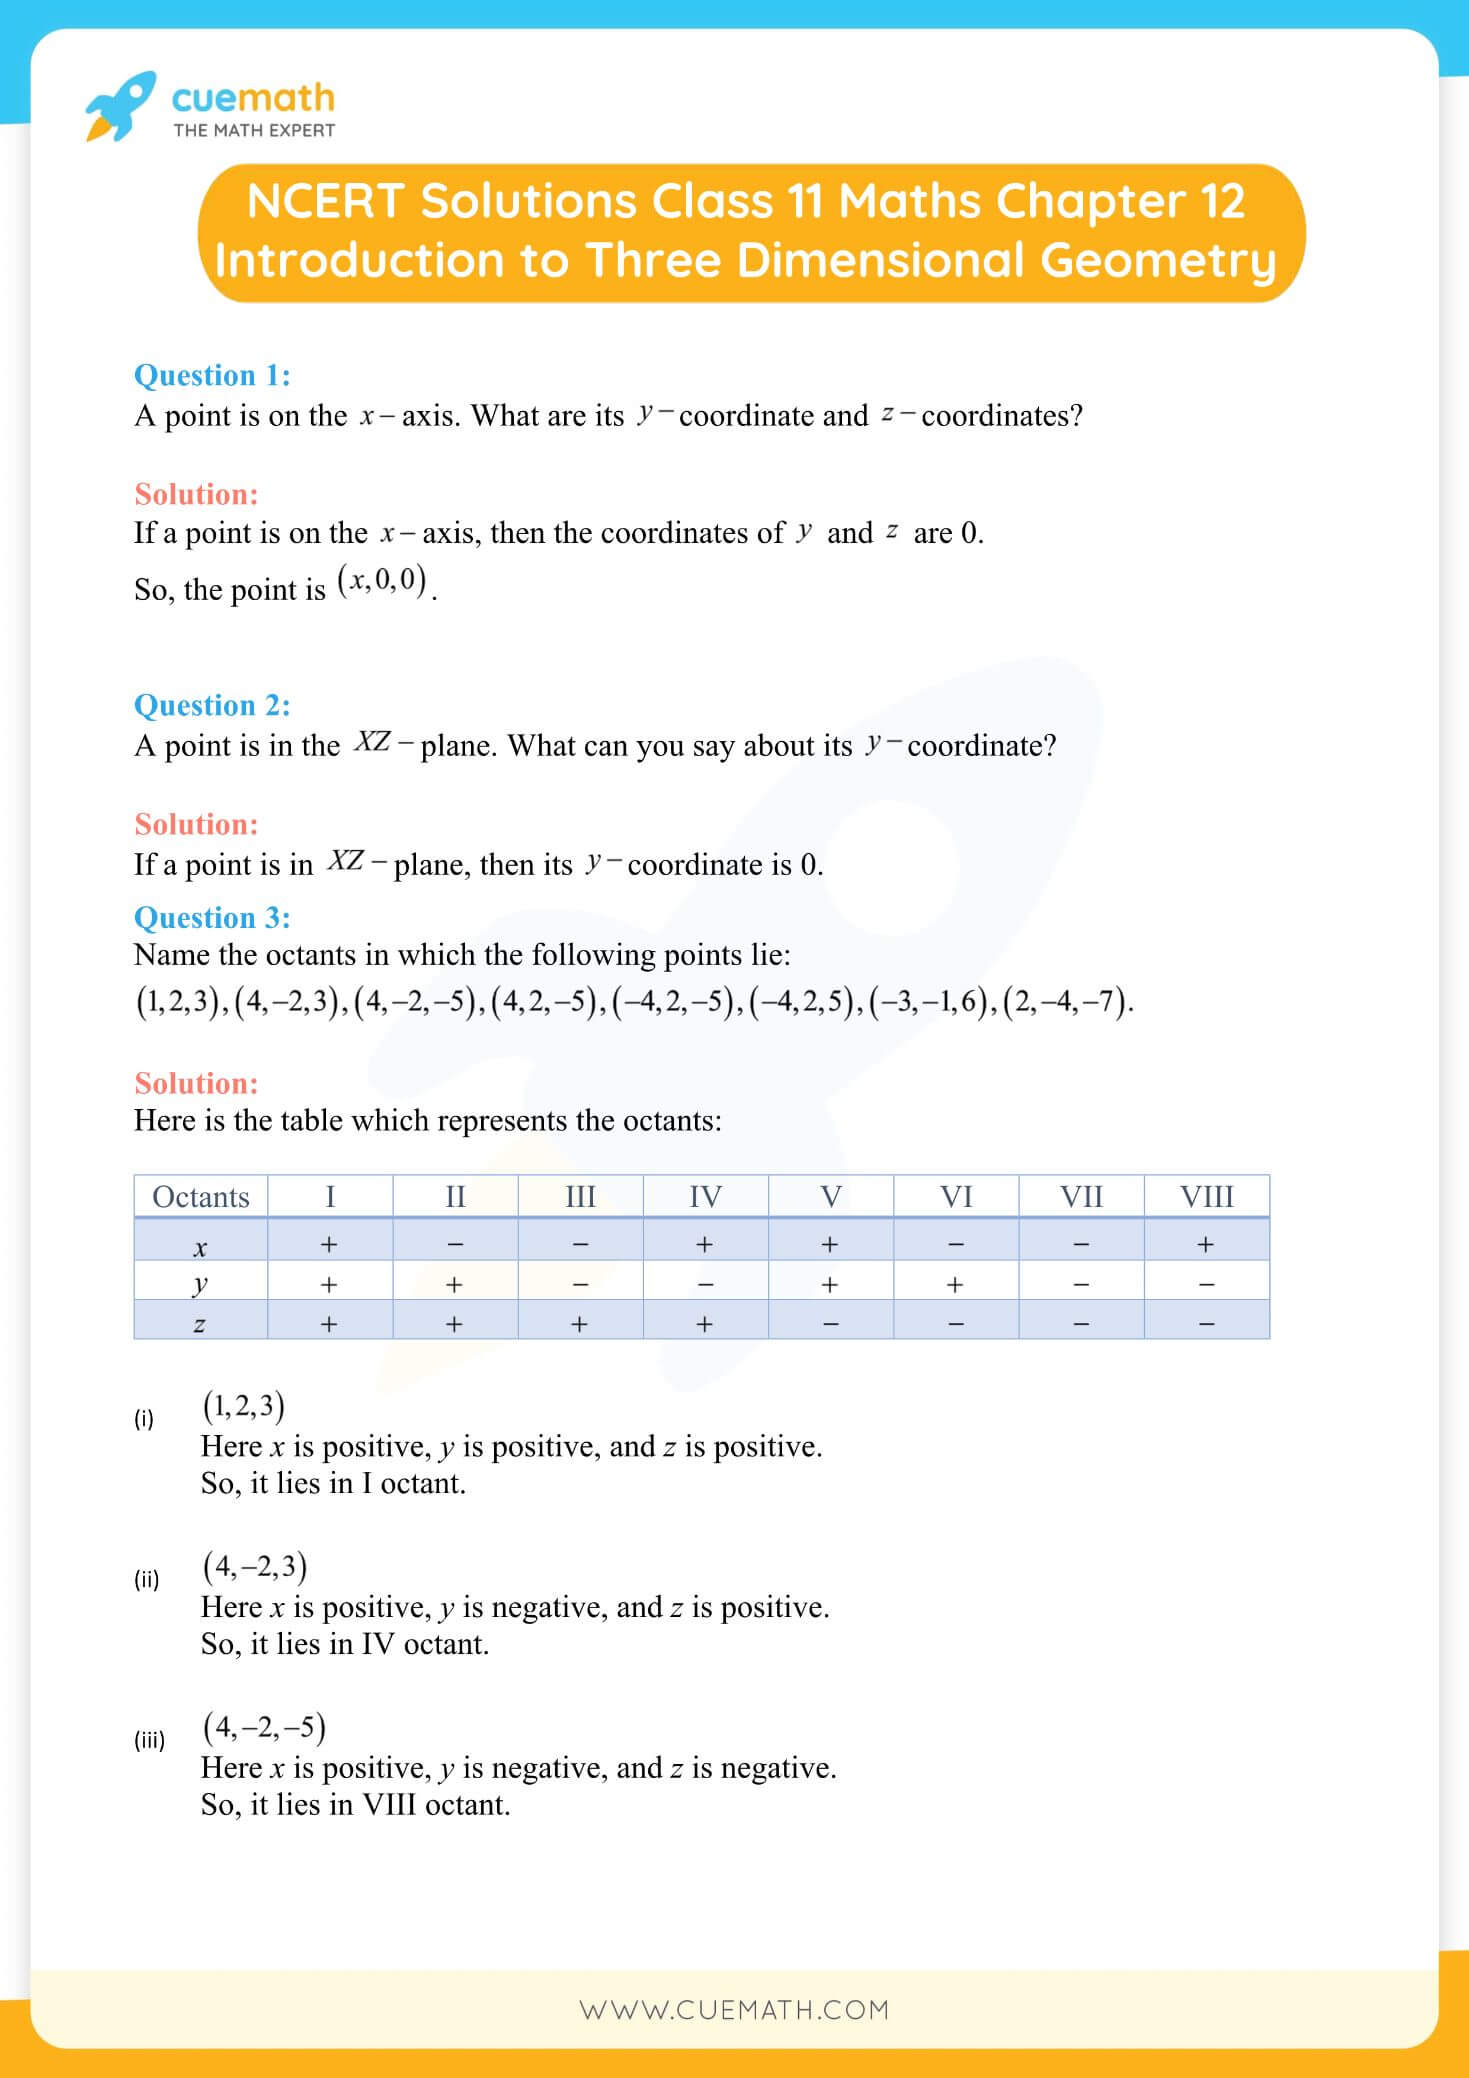 NCERT Solutions Class 11 Maths Chapter 12 Exercise 12.1 1